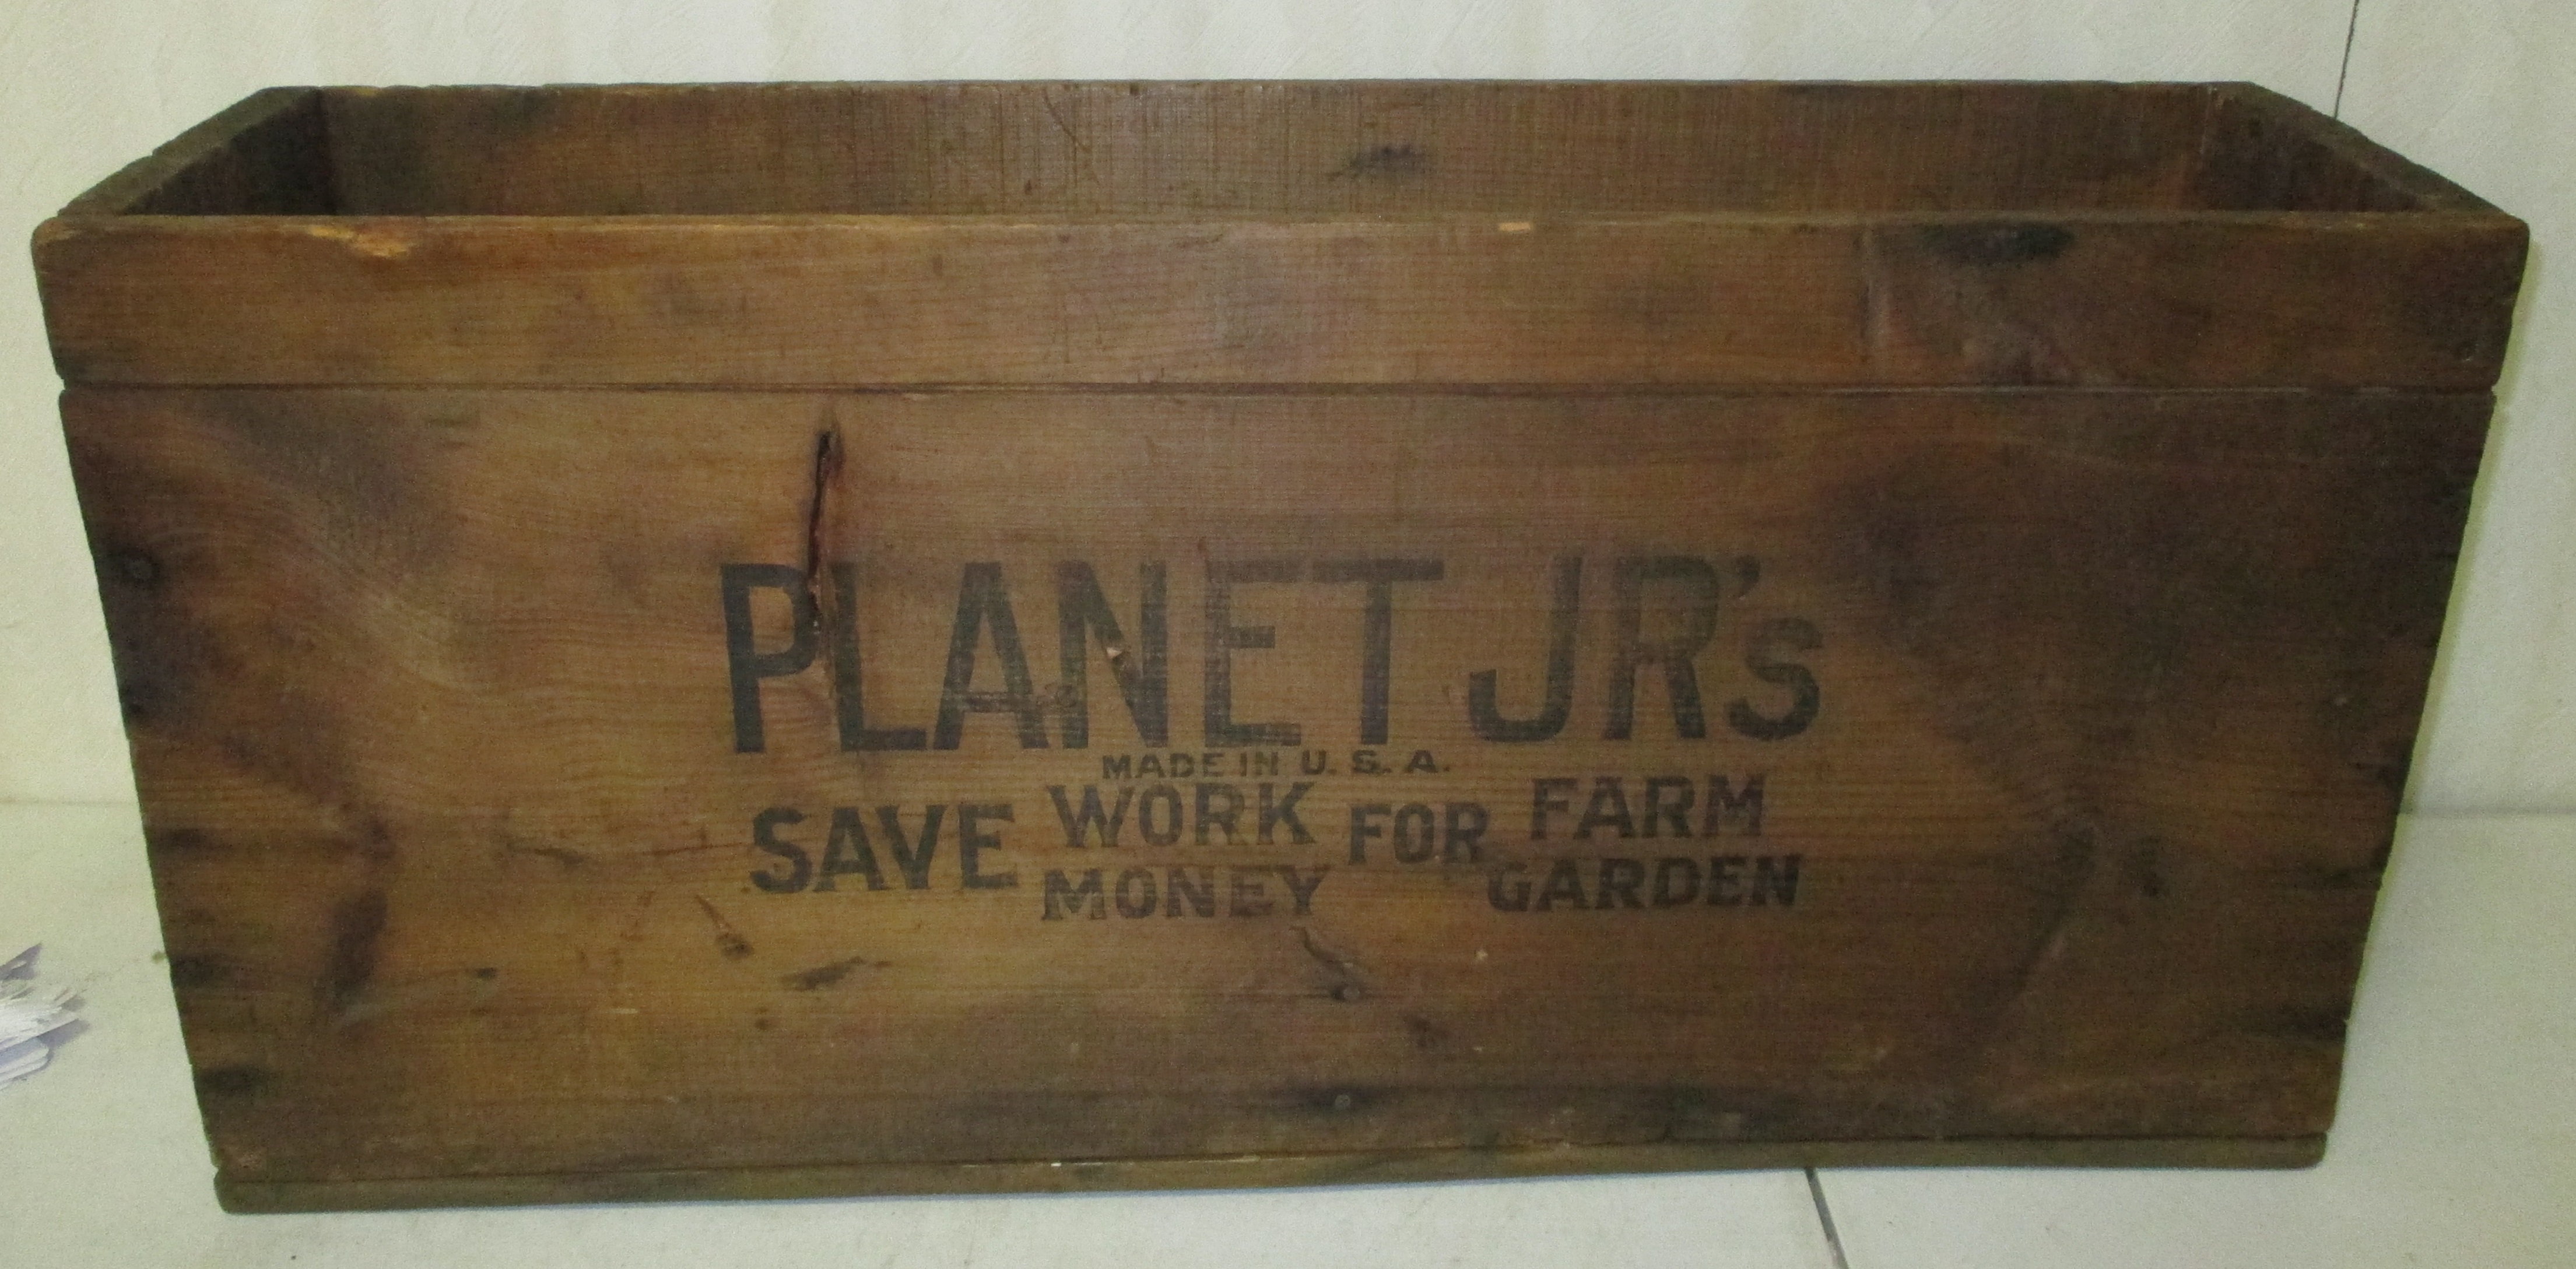 210: Planet JR's Wood Box